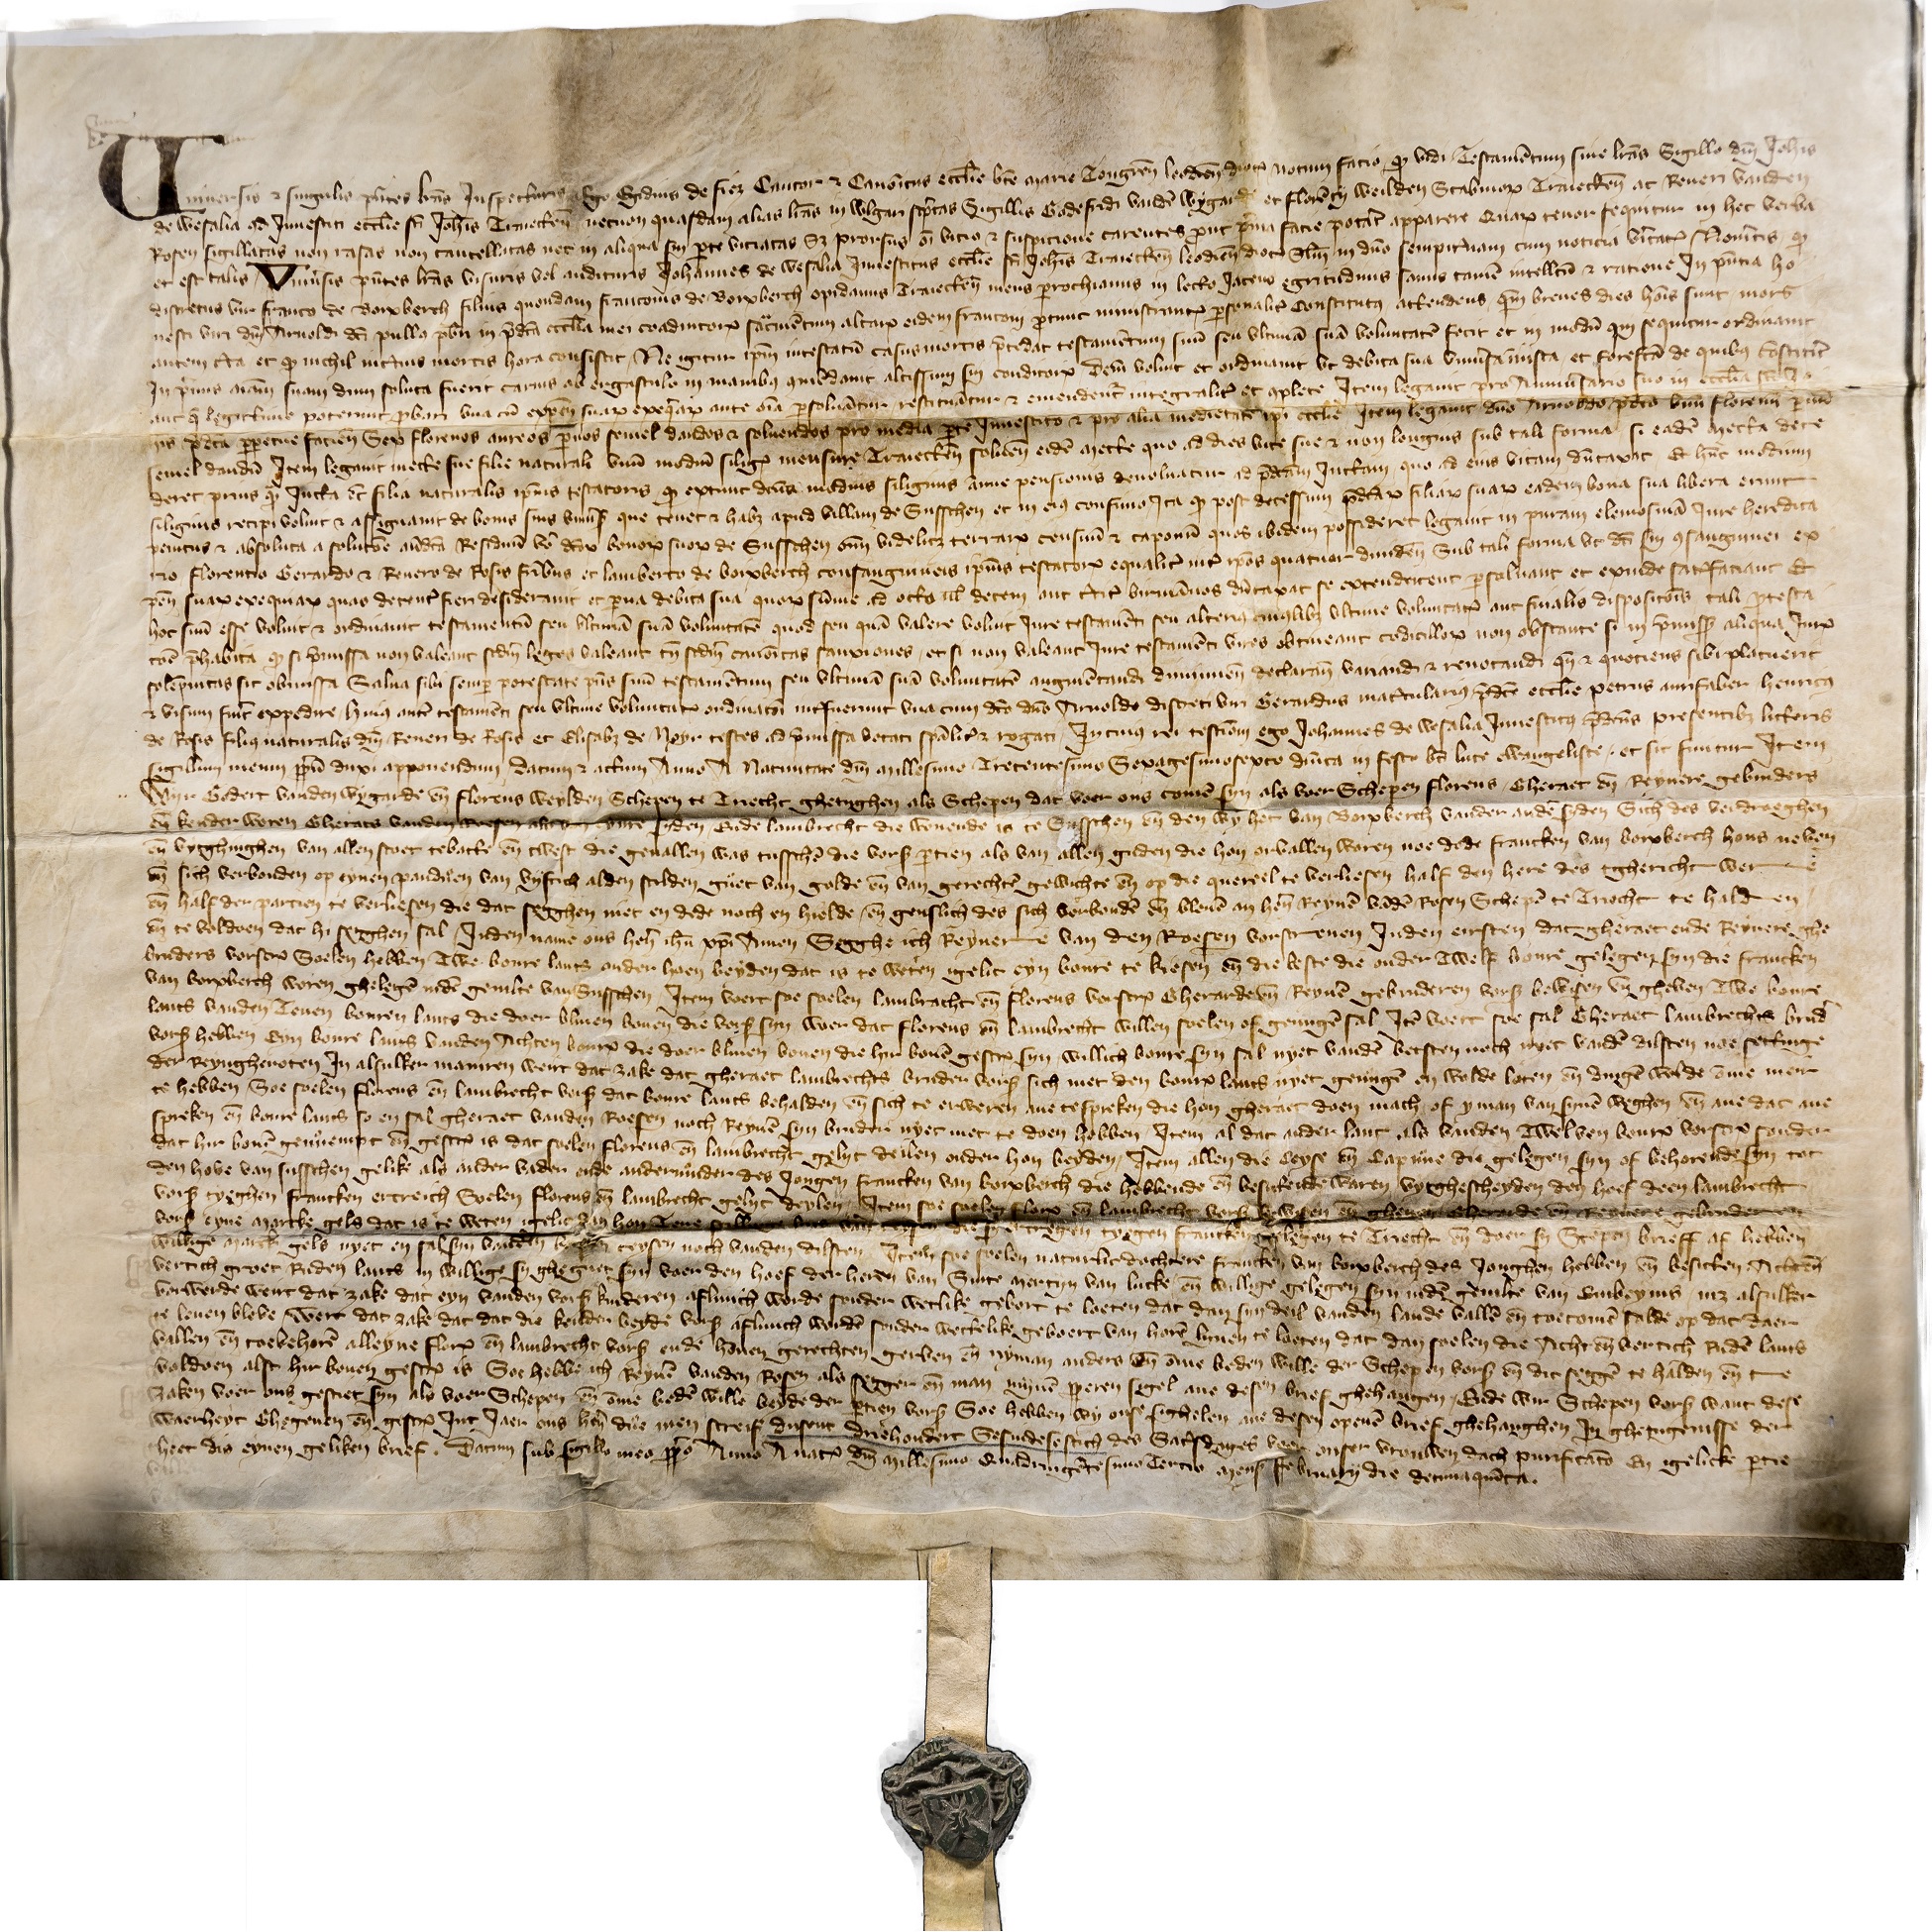 Charter Gilis de Fiez over testament Franco Boxberch in 1403